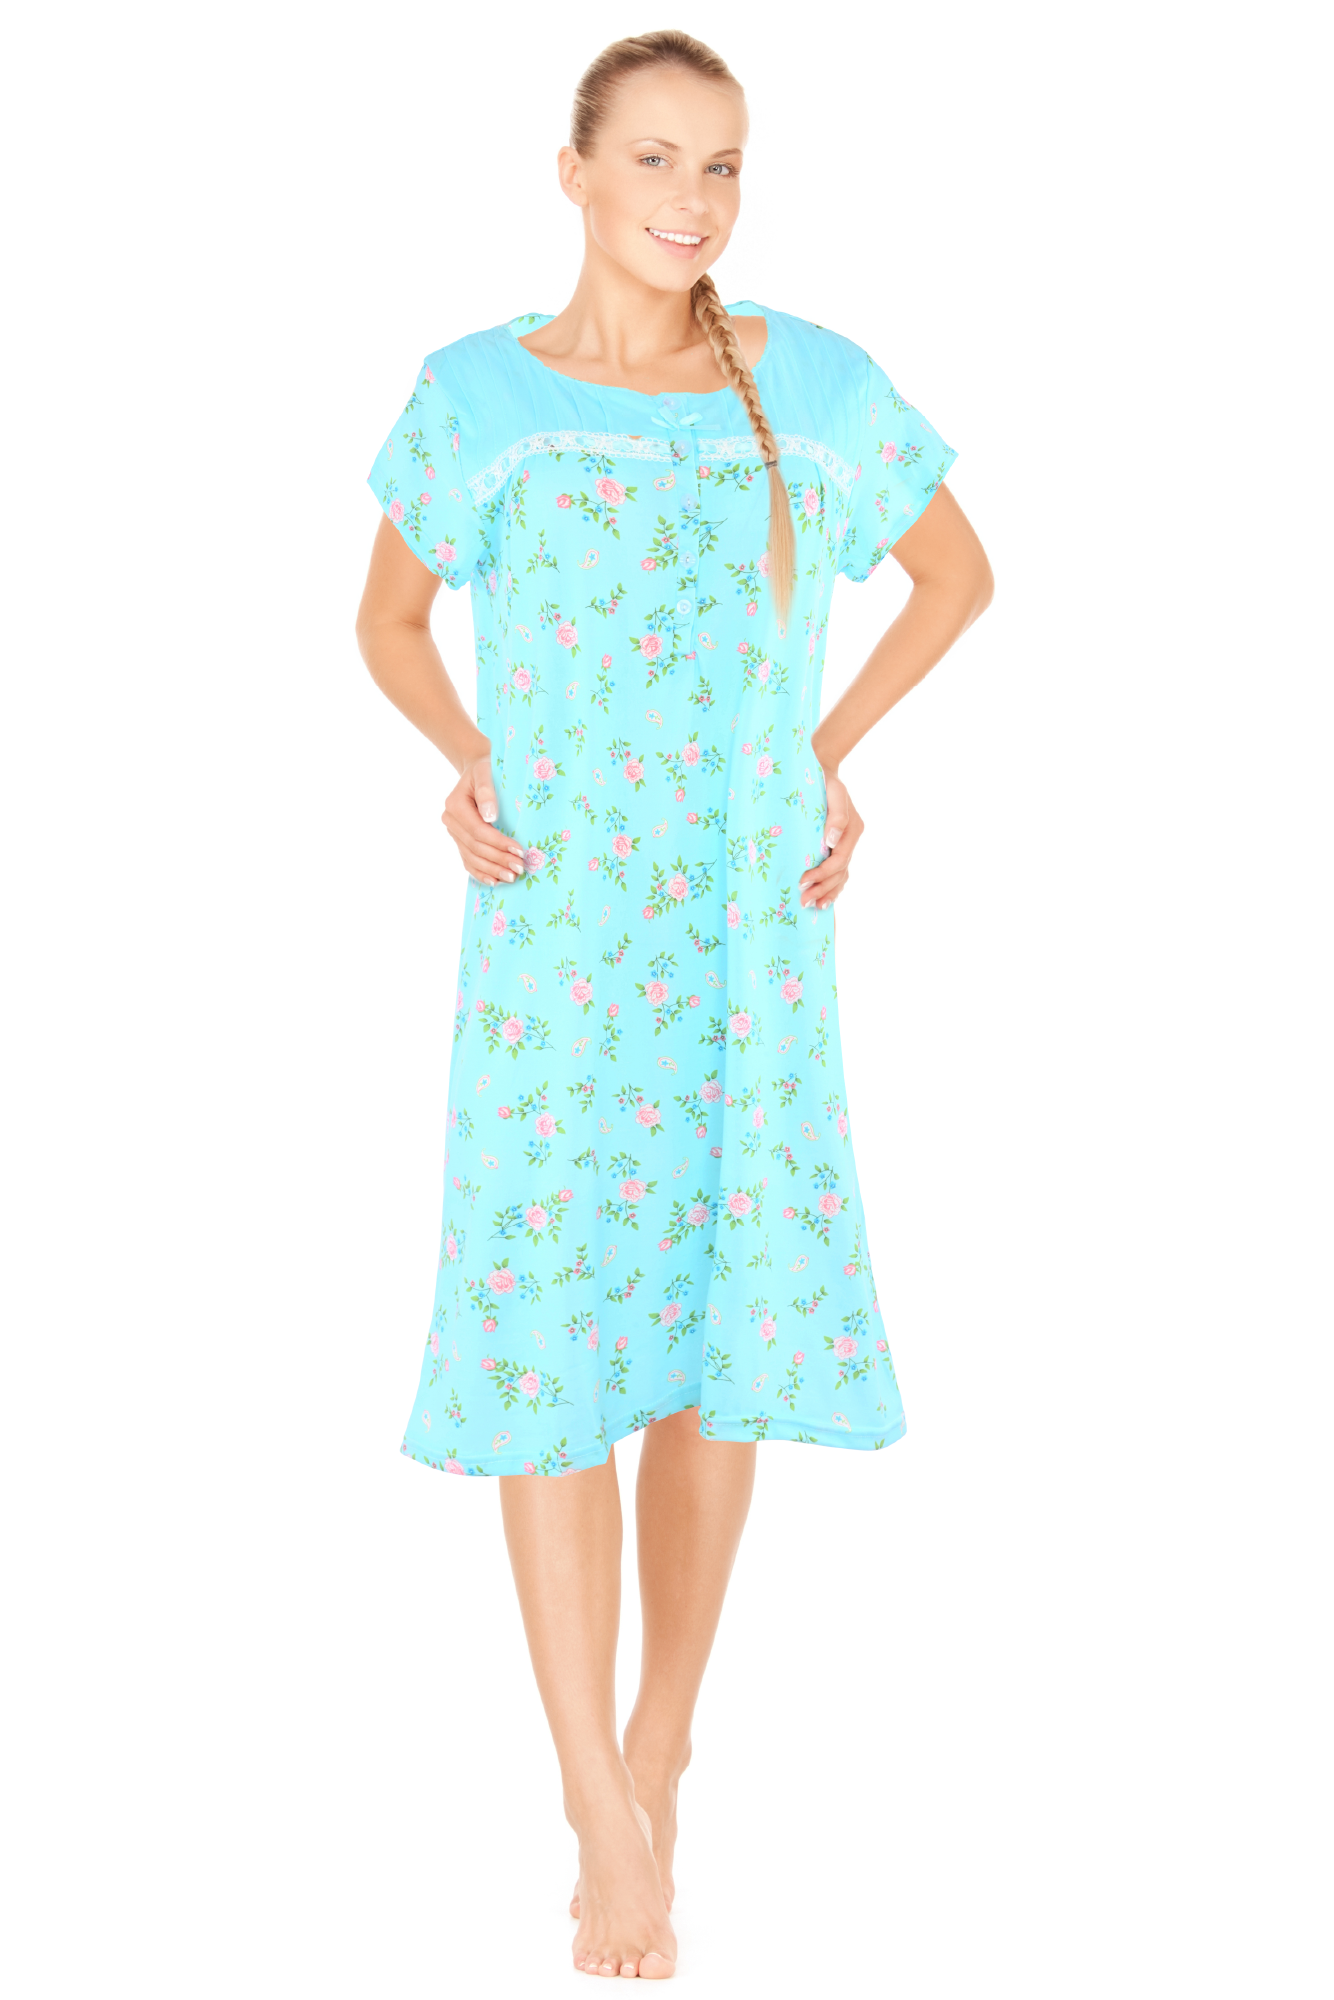 JEFFRICO Womens Short Sleeve Nightgowns Sleepwear Soft Pajama Dress Ni –  Regines